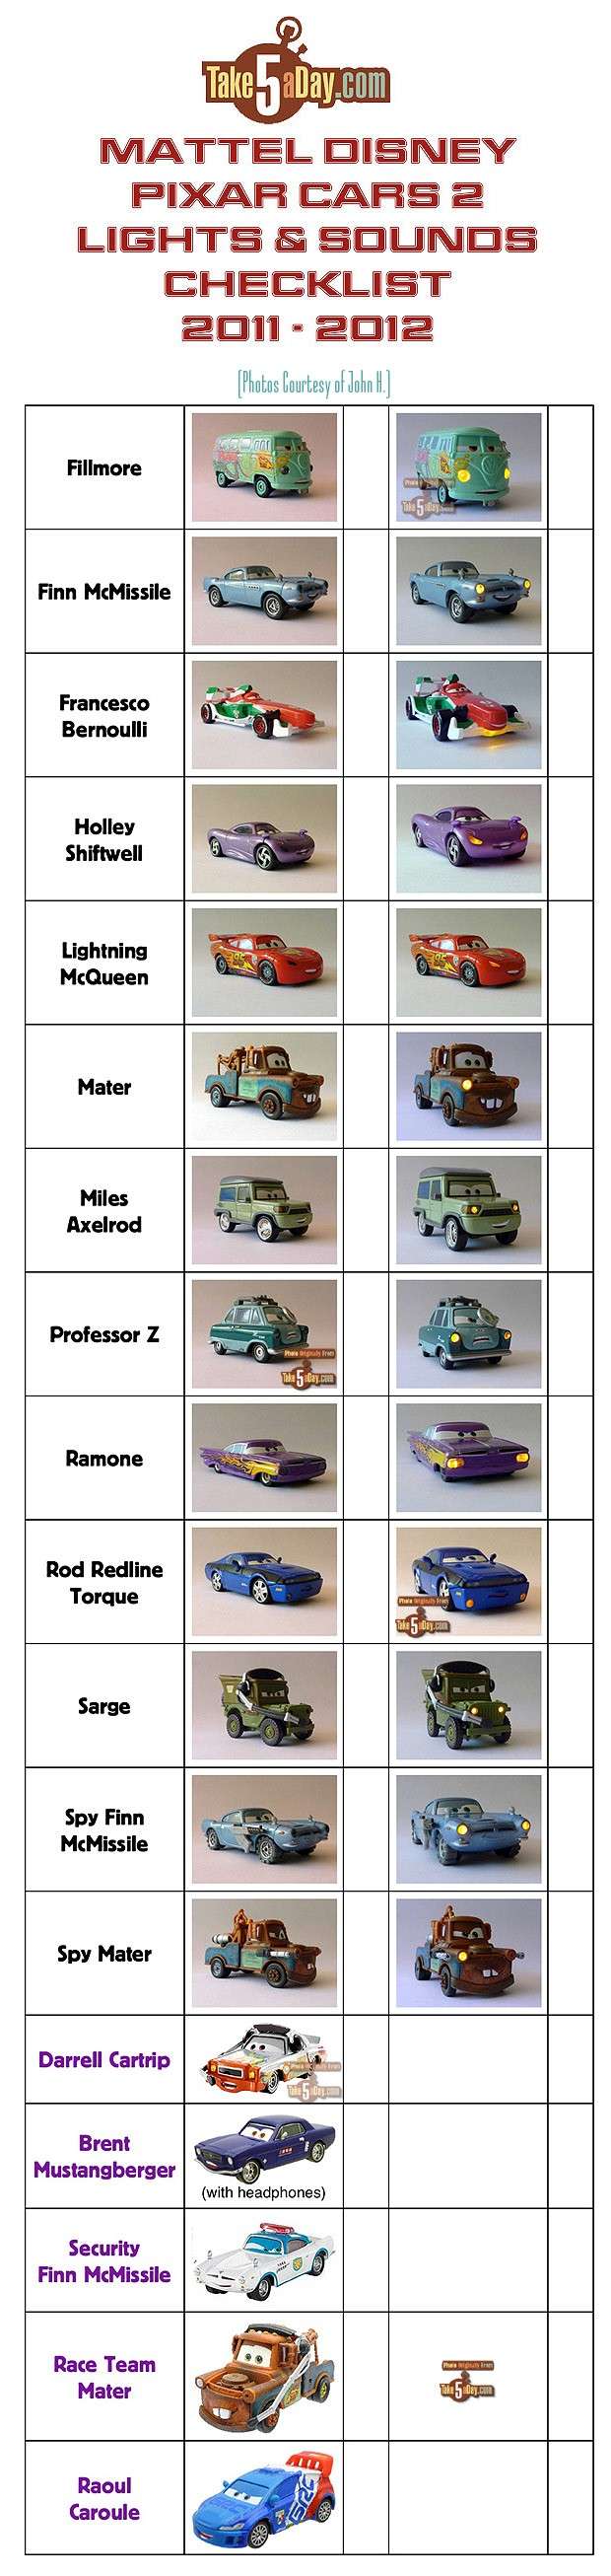 Mattel Disney Pixar CARS 2 Lights & Sounds Visual Checklist Checli11